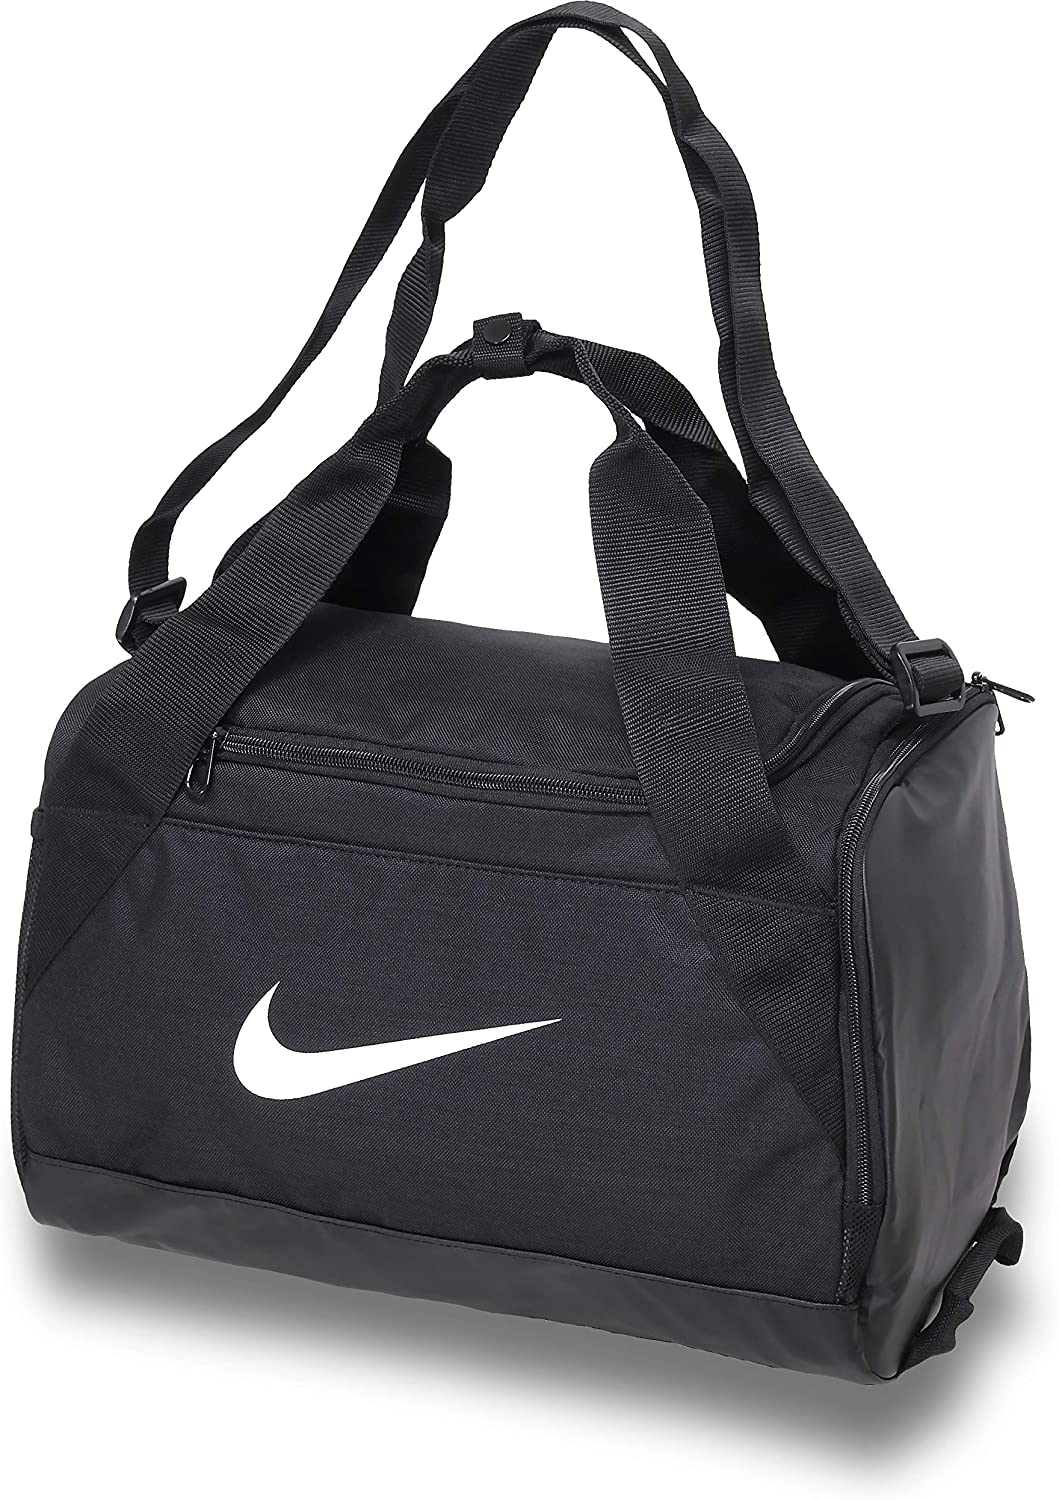 Nike Brasilia 9.5 DM3977 010 bag – Your Sports Performance